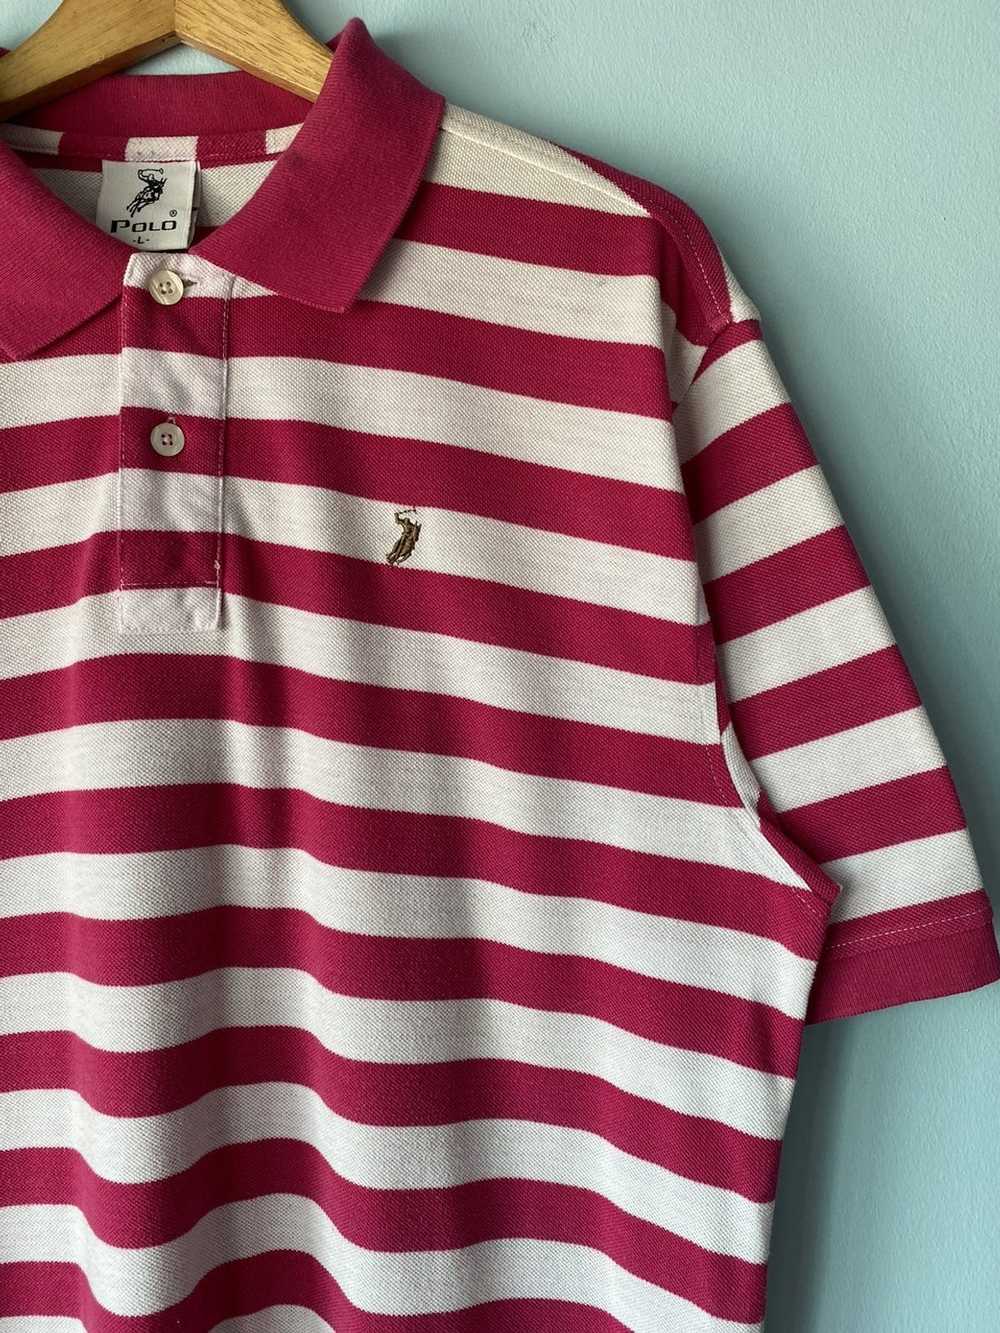 Polo Ralph Lauren Vintage Polo Striped Shirt - image 3